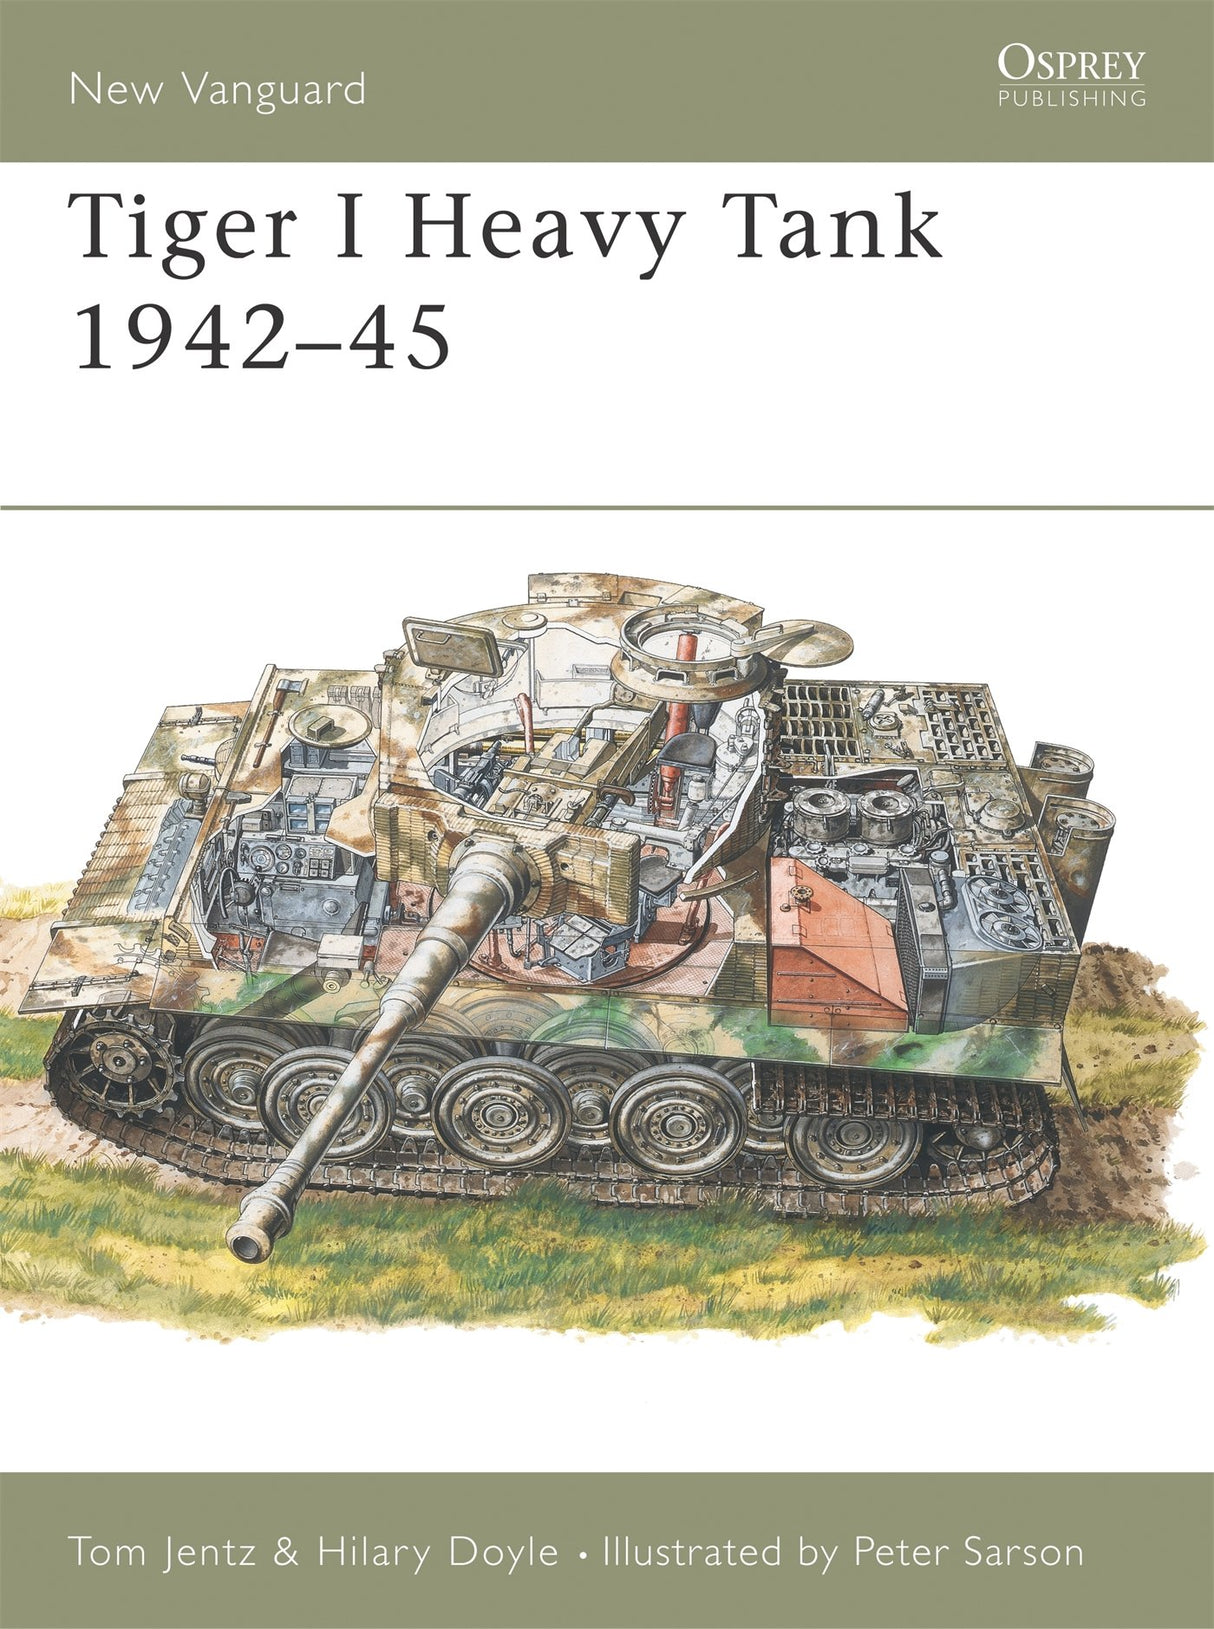 Tiger 1 Heavy Tank 1942-45 - The Tank Museum